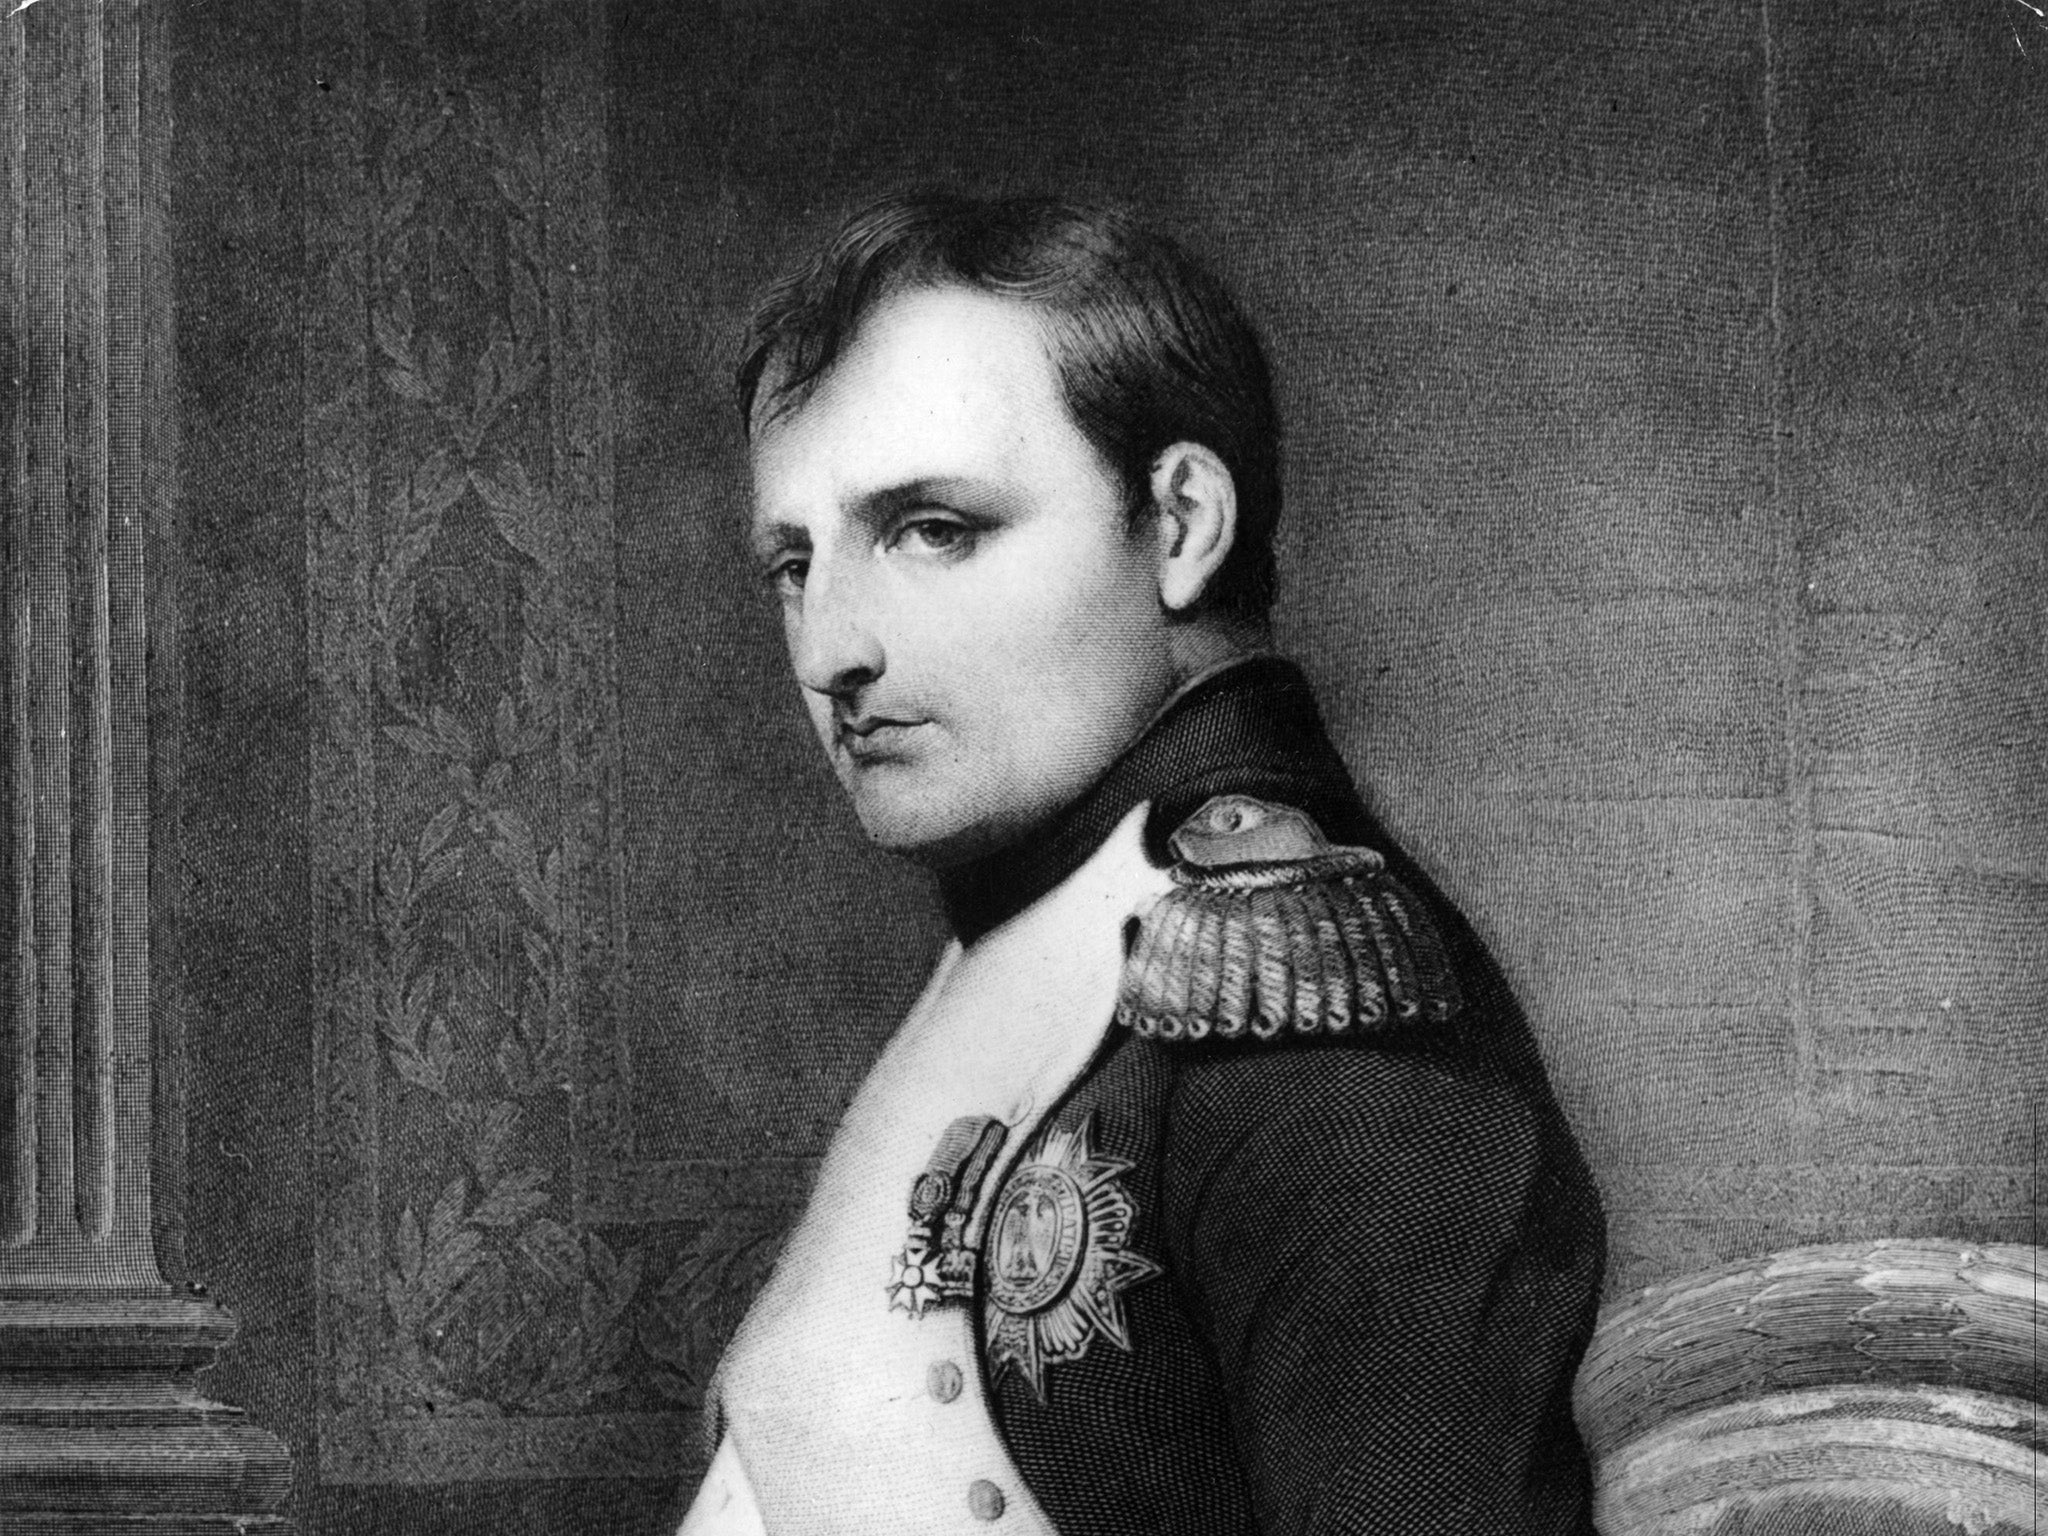 Napoleon Bonaparte died a prisoner in 1821